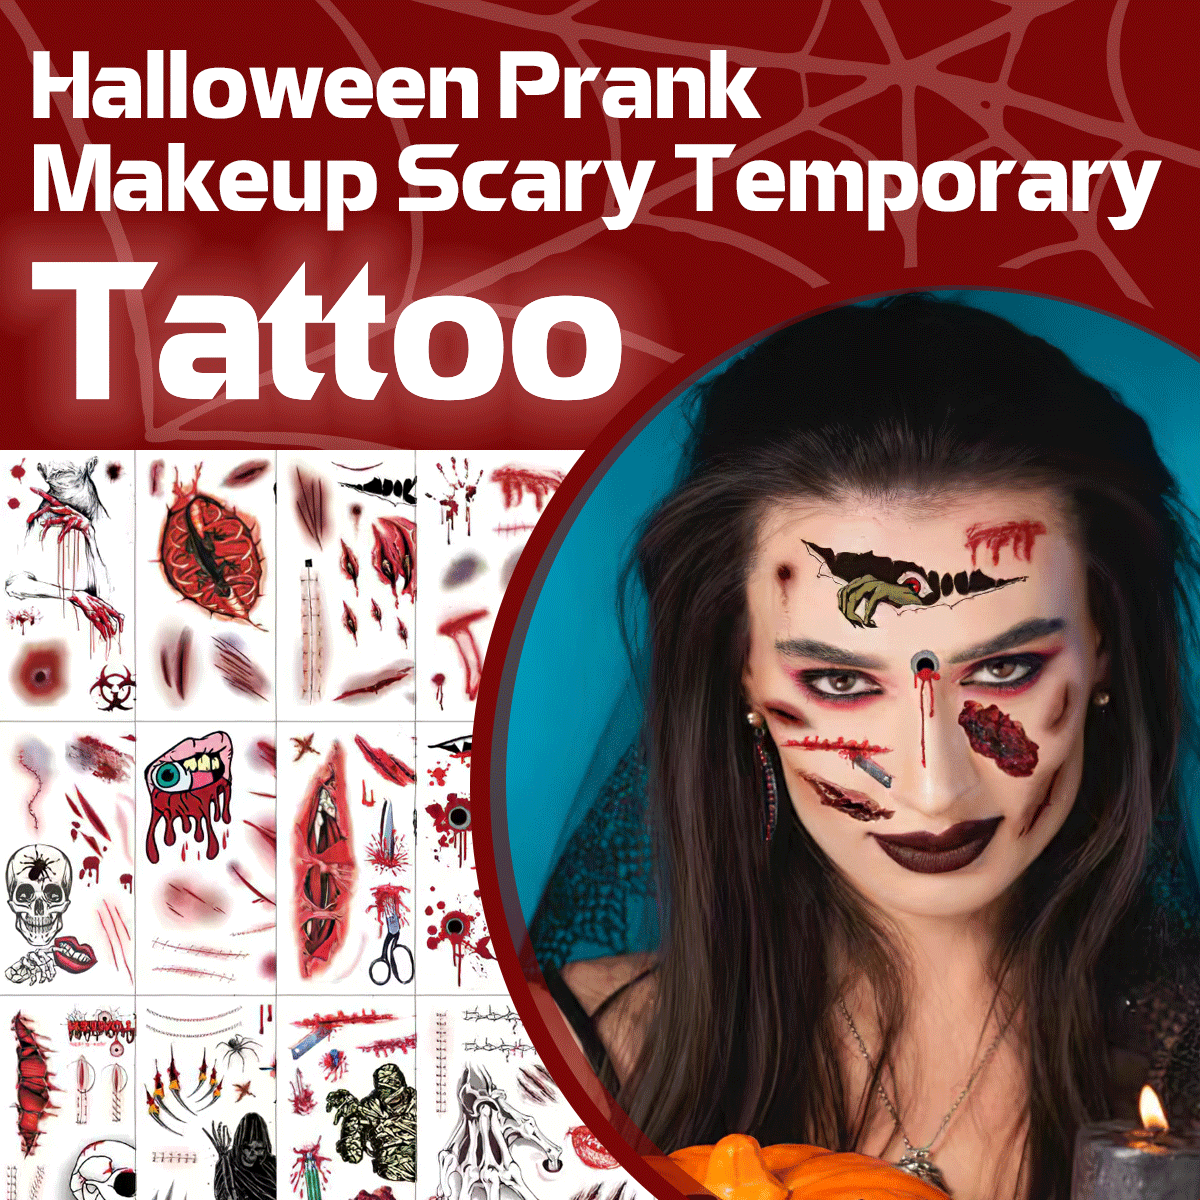 Halloween Prank Makeup Scary Temporary Tattoo | Halloween costume